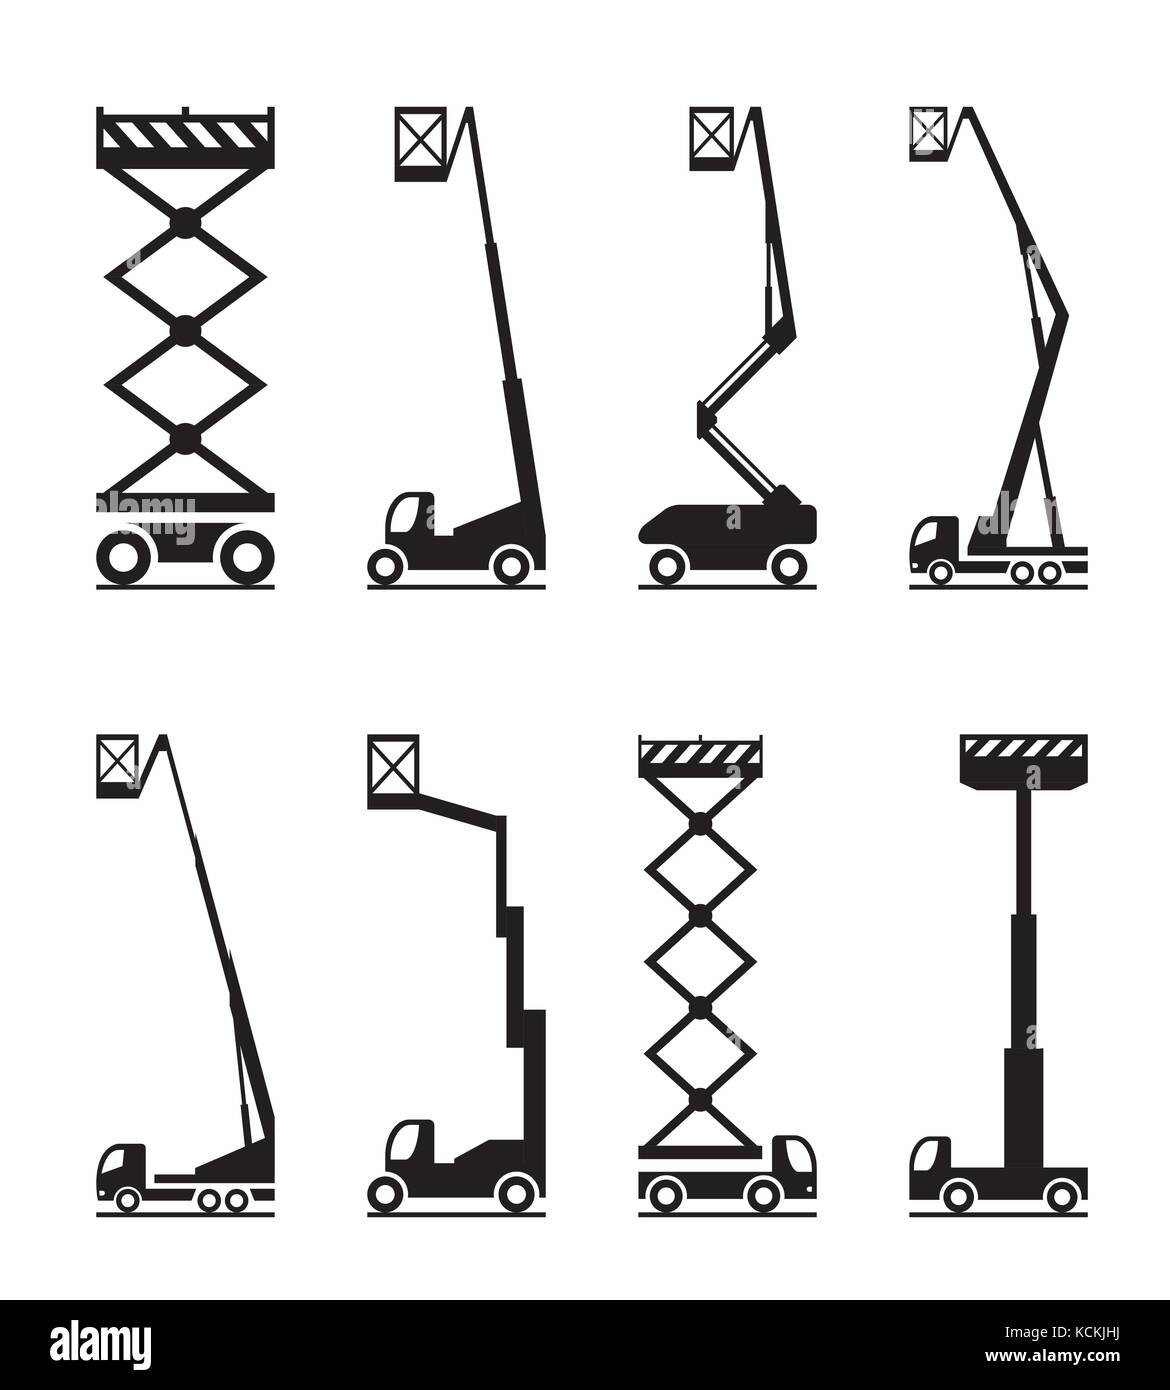 Industrial lifting equipment - vector illustration Stock Vector